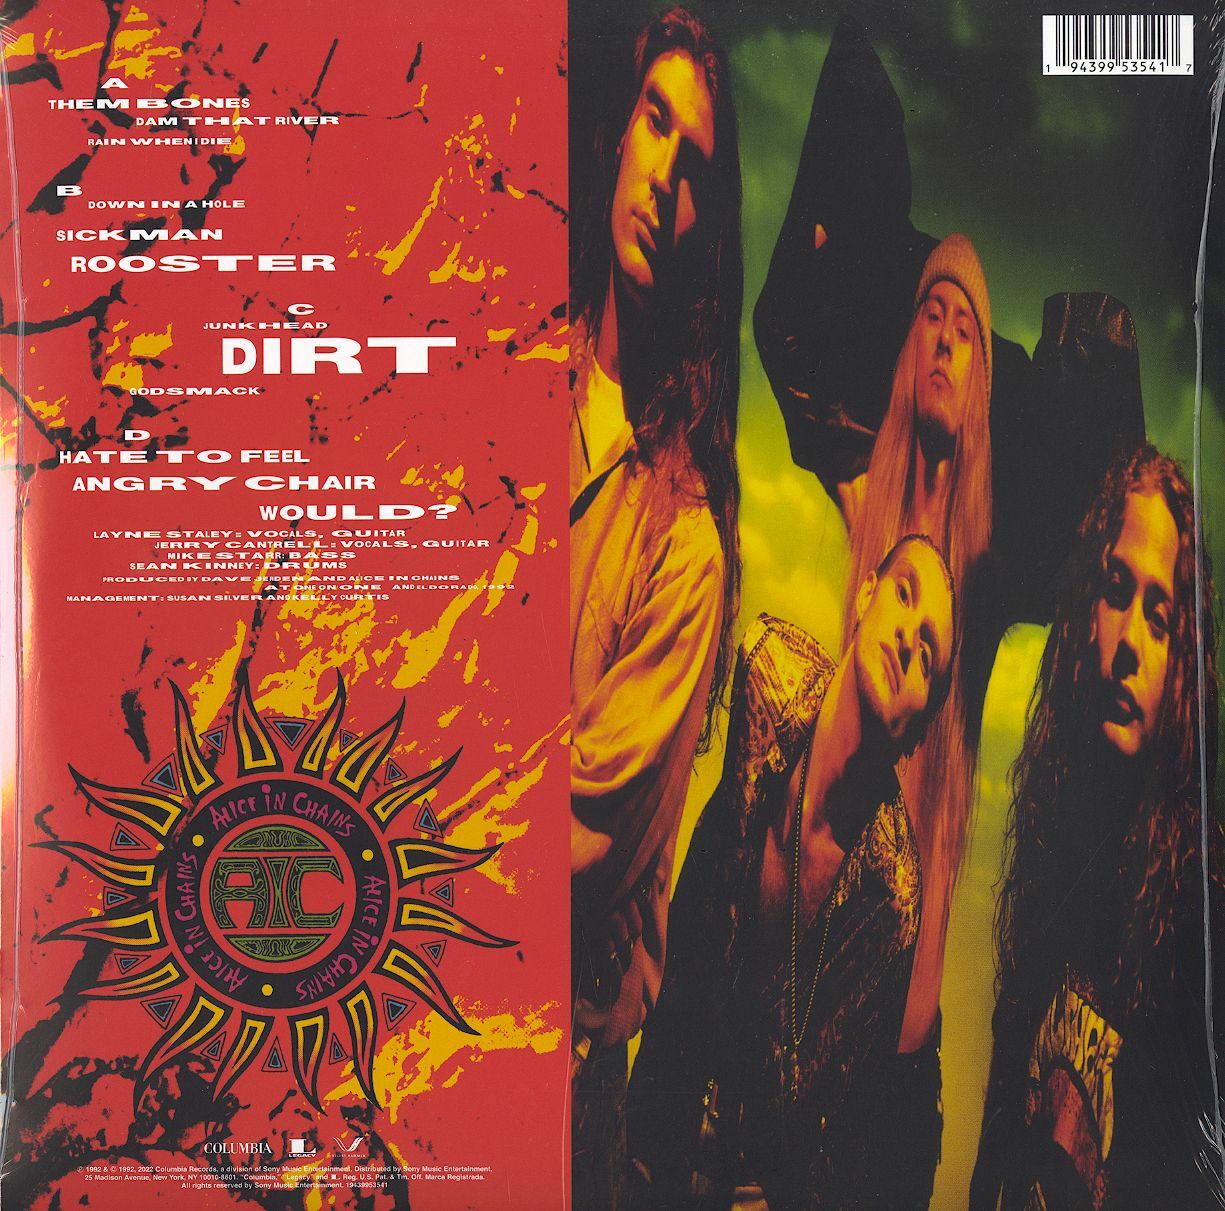 Alice In Chains, Dirt, 150 Gram Double Black Vinyl, LP, Sony Legacy, 2022